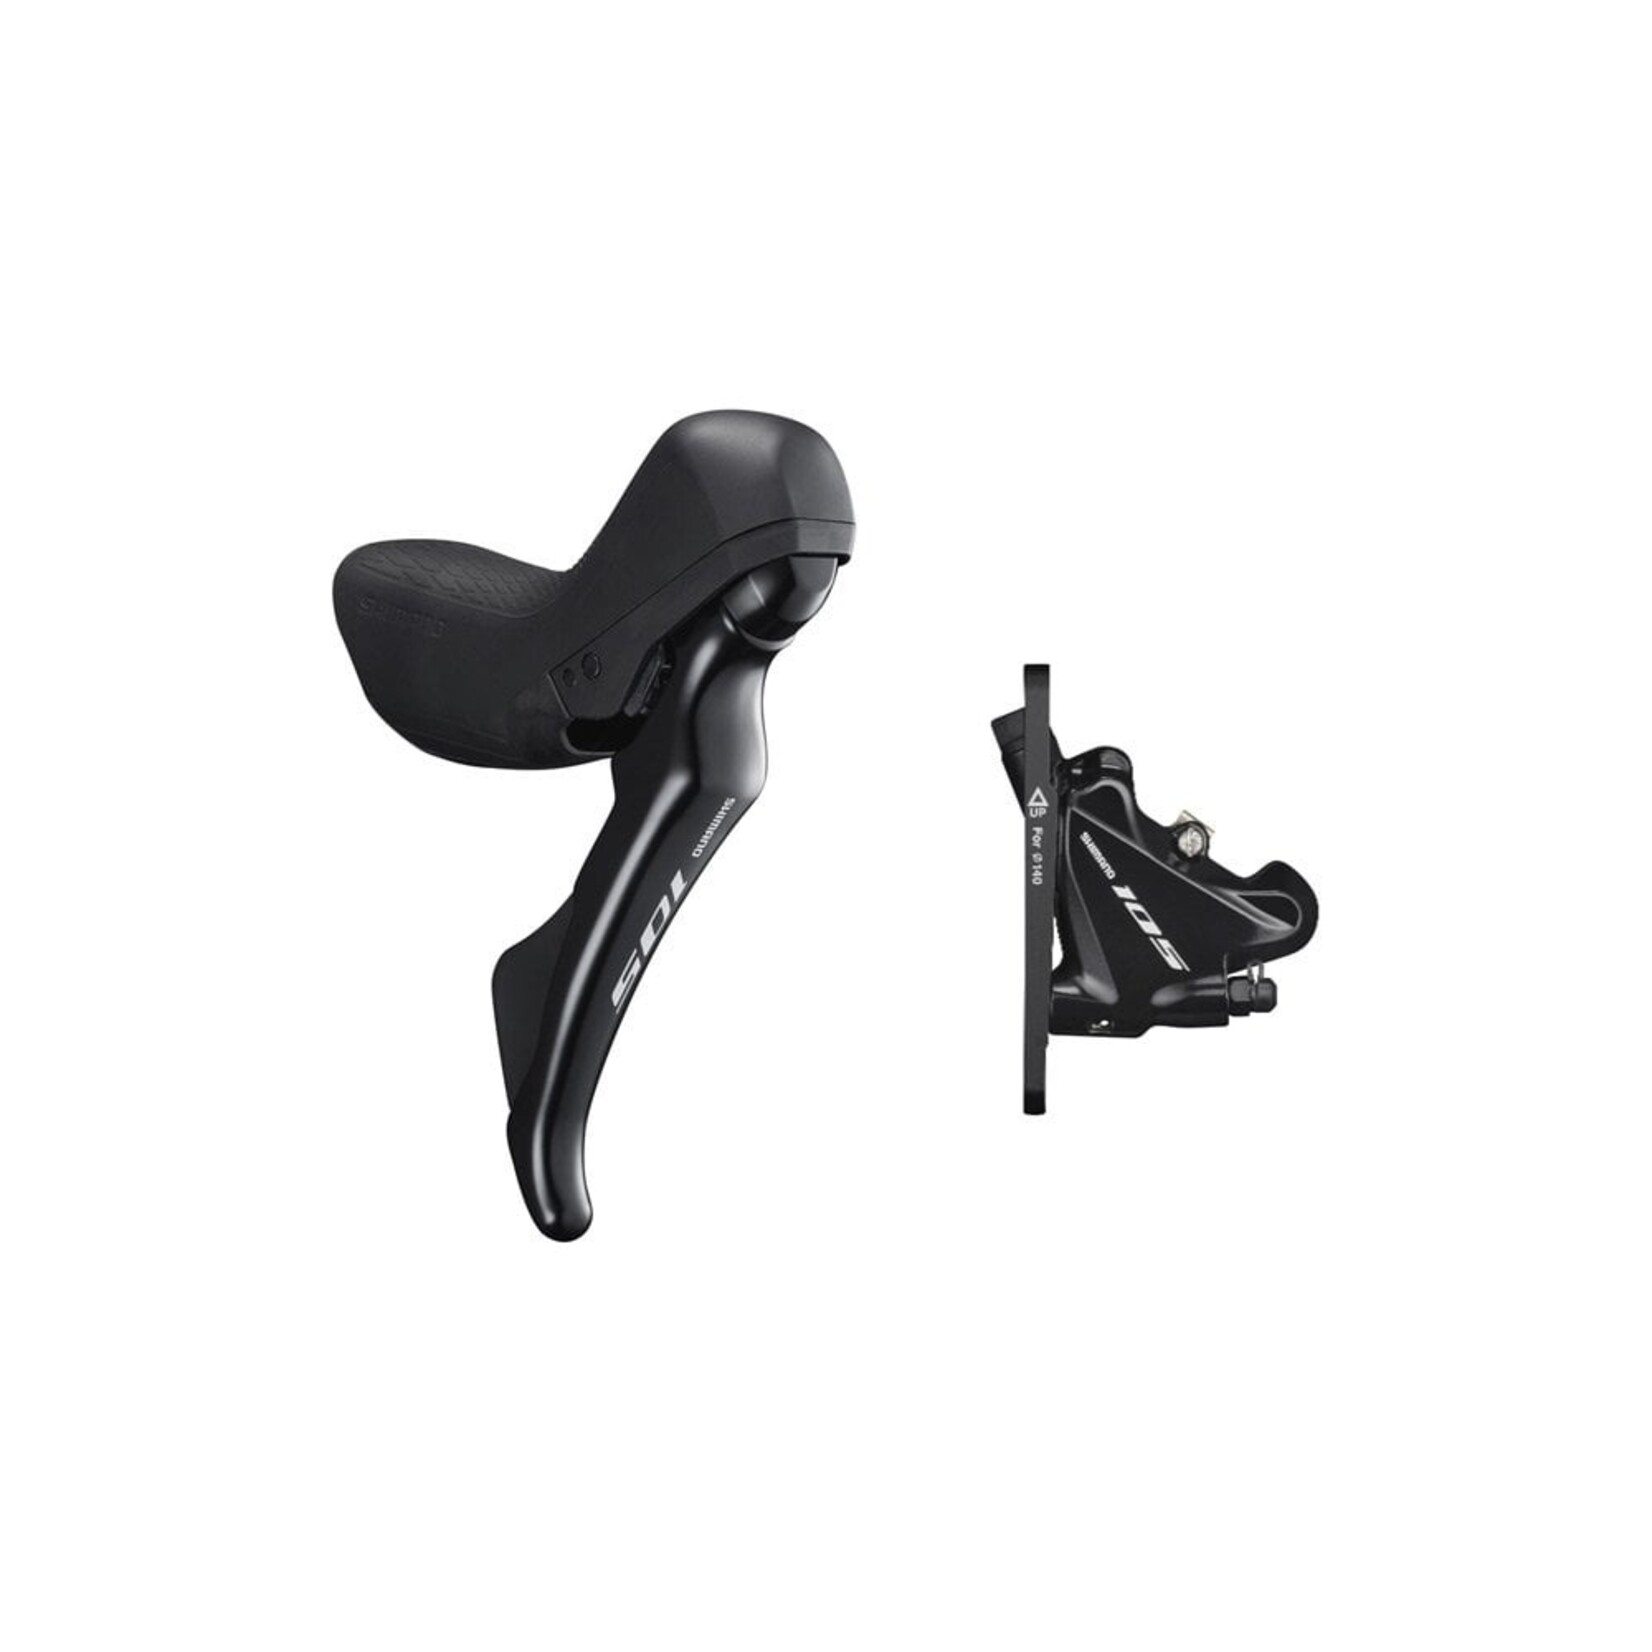 Shimano 105 ST-R7020 105 hydraulic disc STI set, flat mount calliper, right front, black